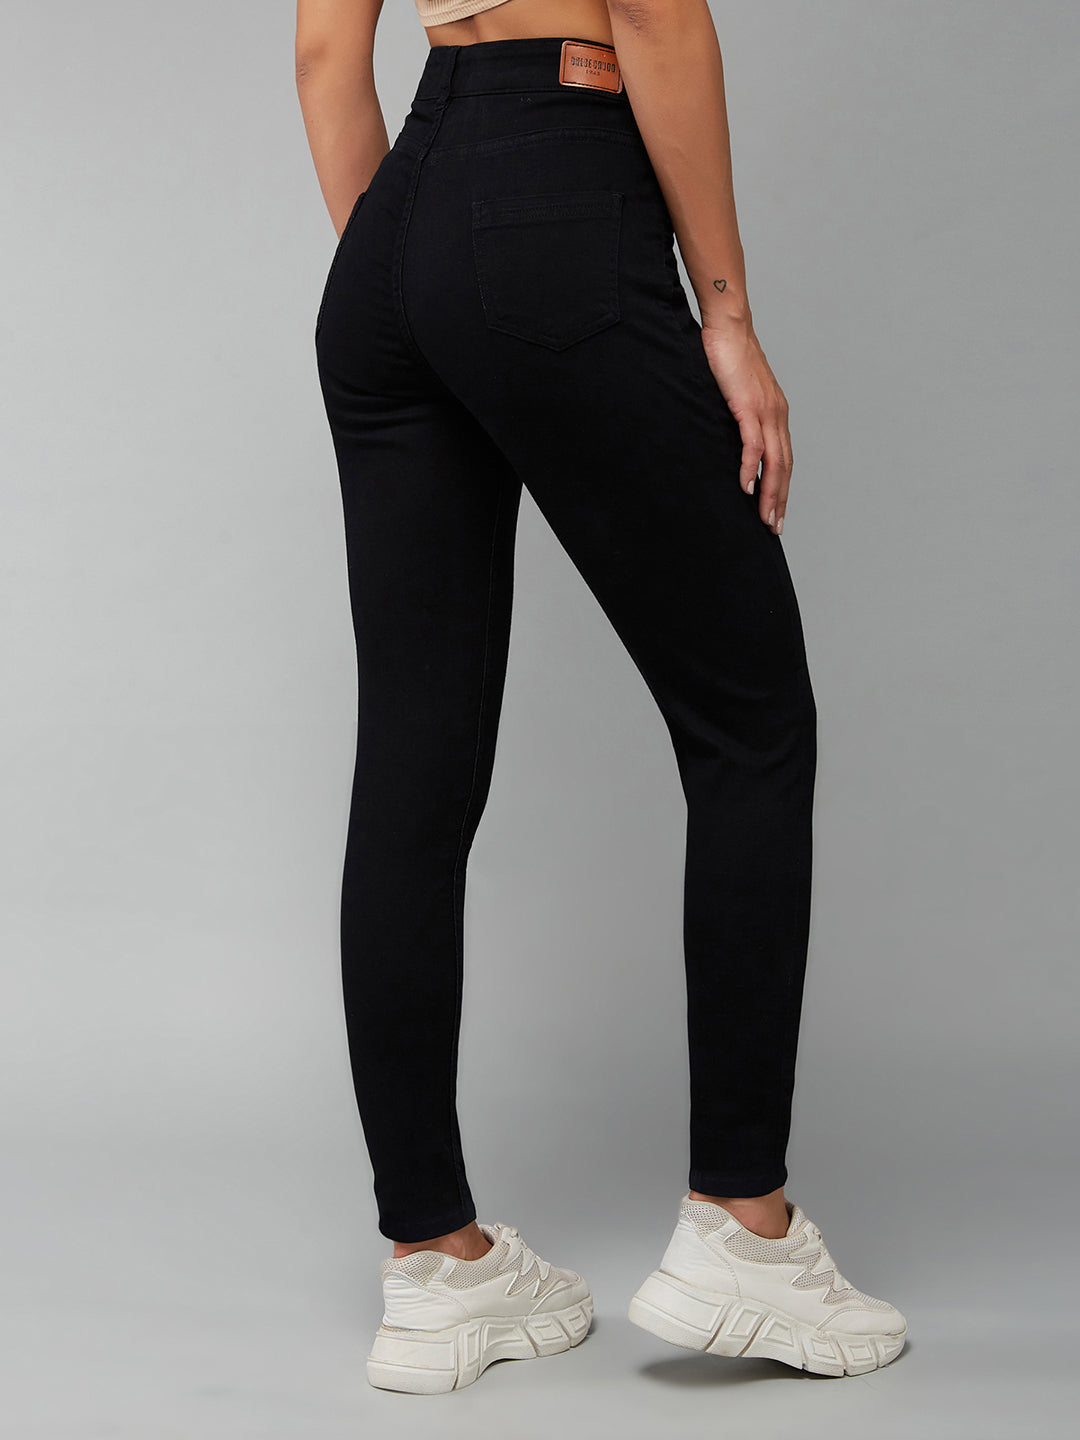 Women's Black Skinny Fit High Rise Clean Look Regular Length Stretchable Denim Jeans